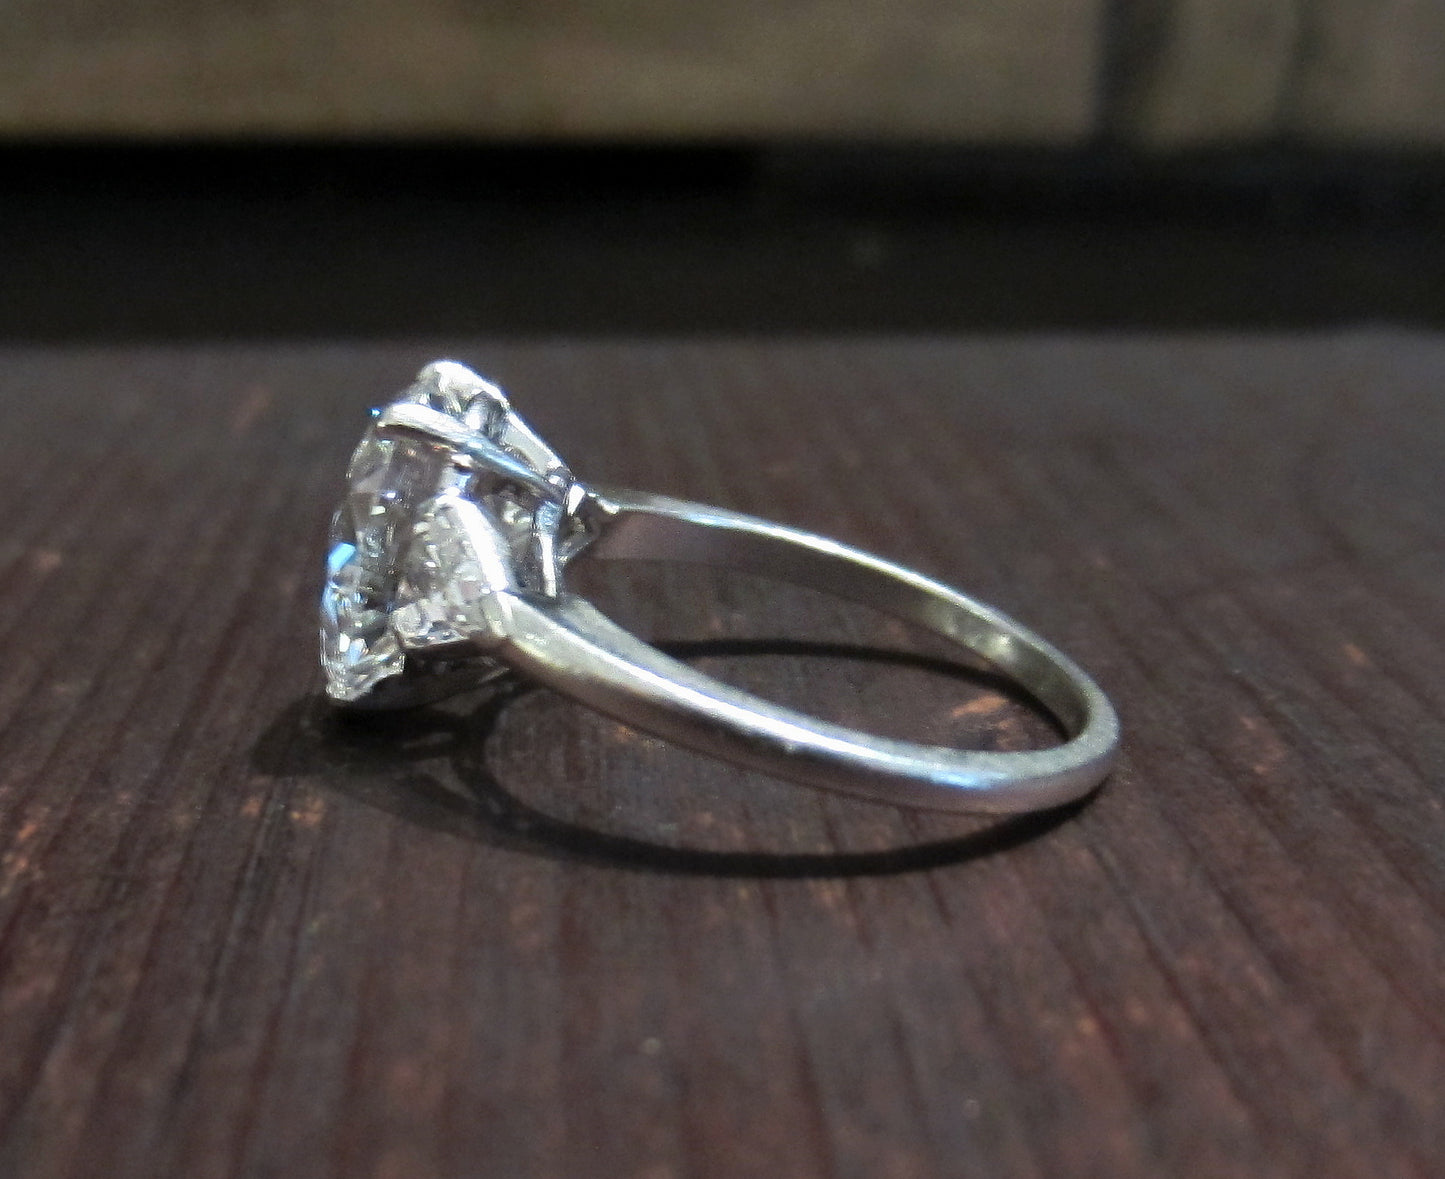 SOLD--Late Art Deco Pear Cut Diamond 2.41ct FVS1 Engagement Ring Platinum c. 1940